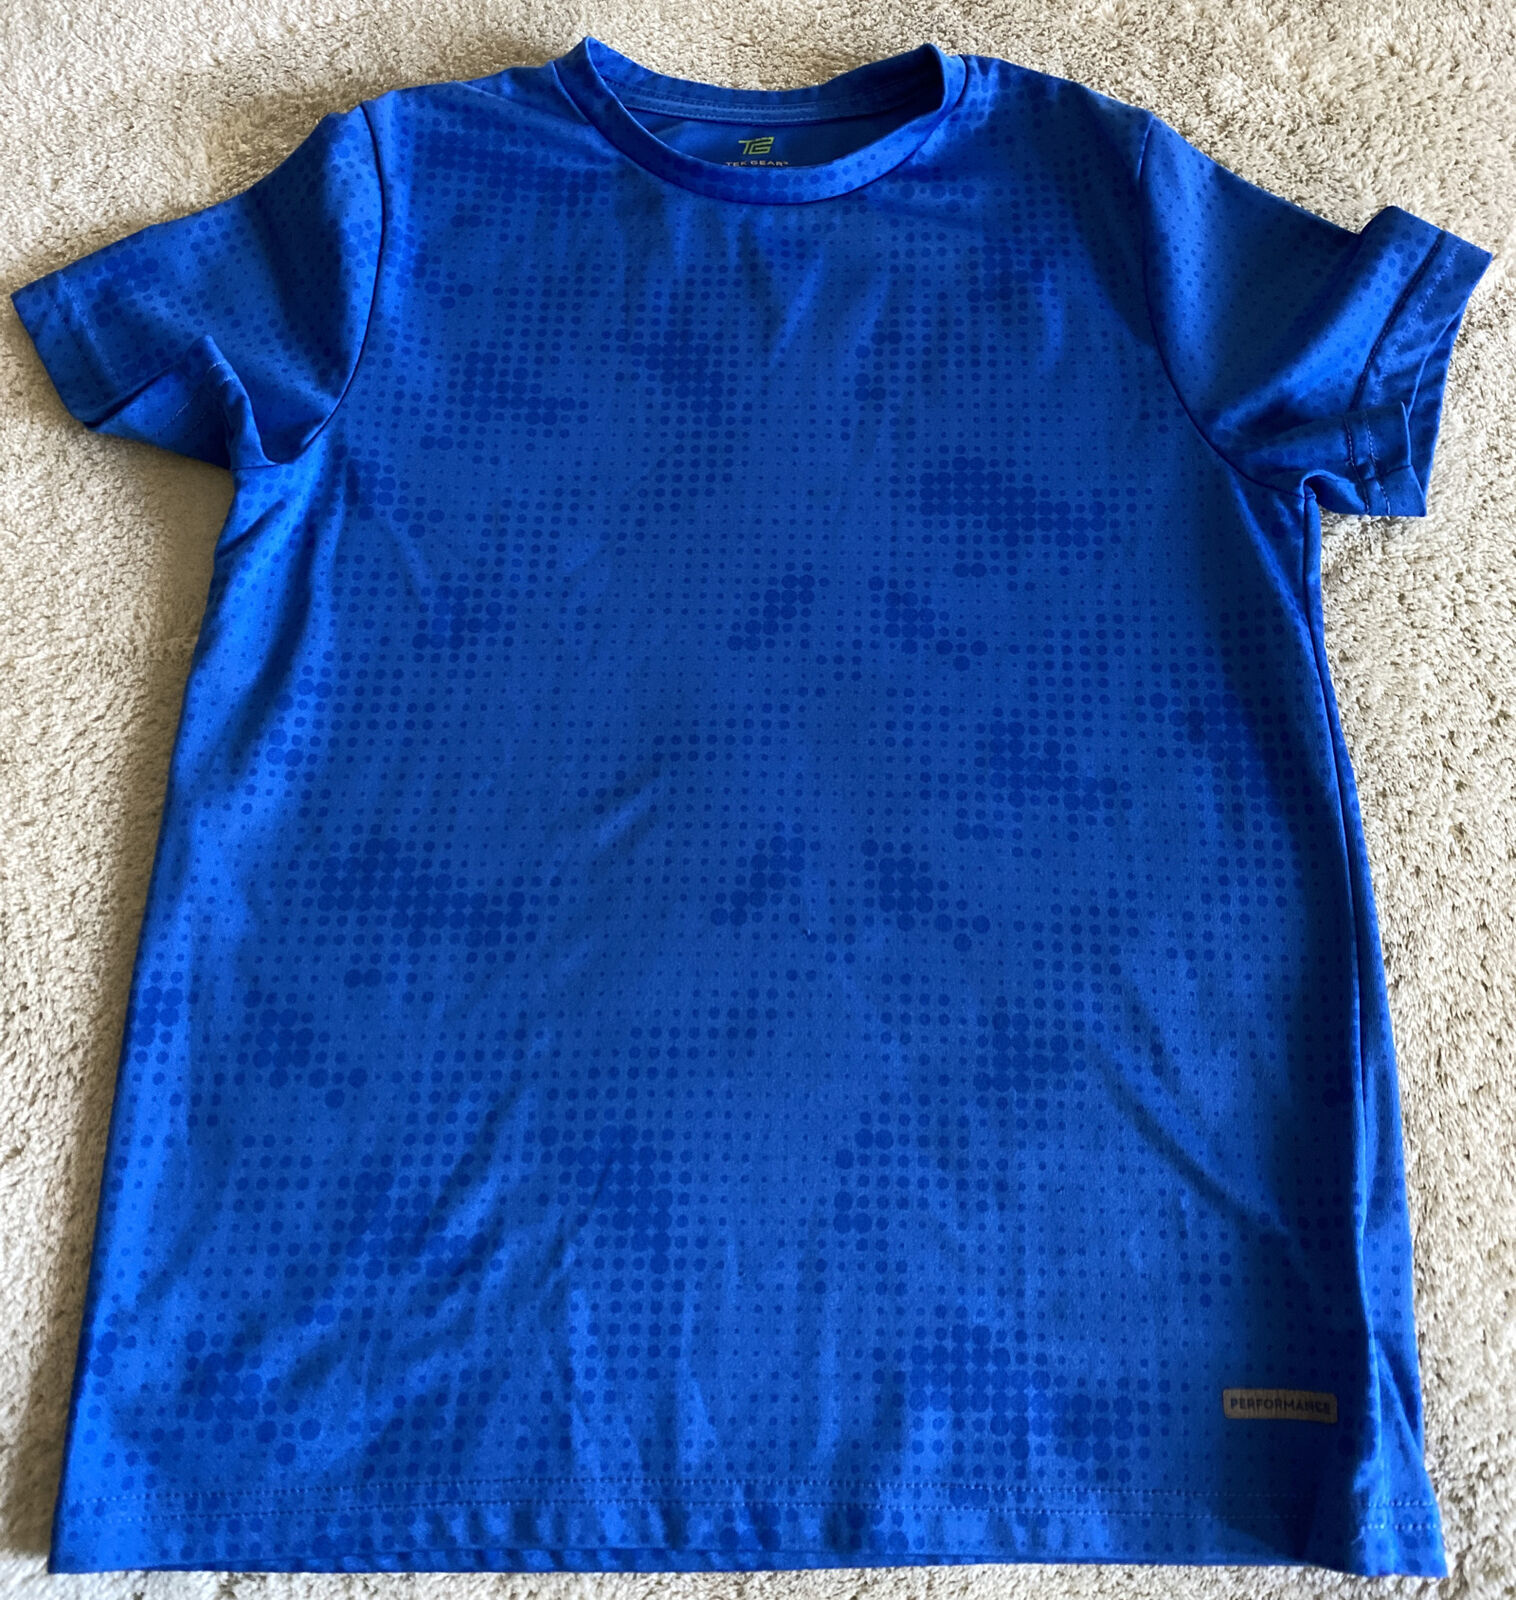 Primary image for Tek Gear Boys Blue Performance Geometric Short Sleeve Shirt Medium 10-12